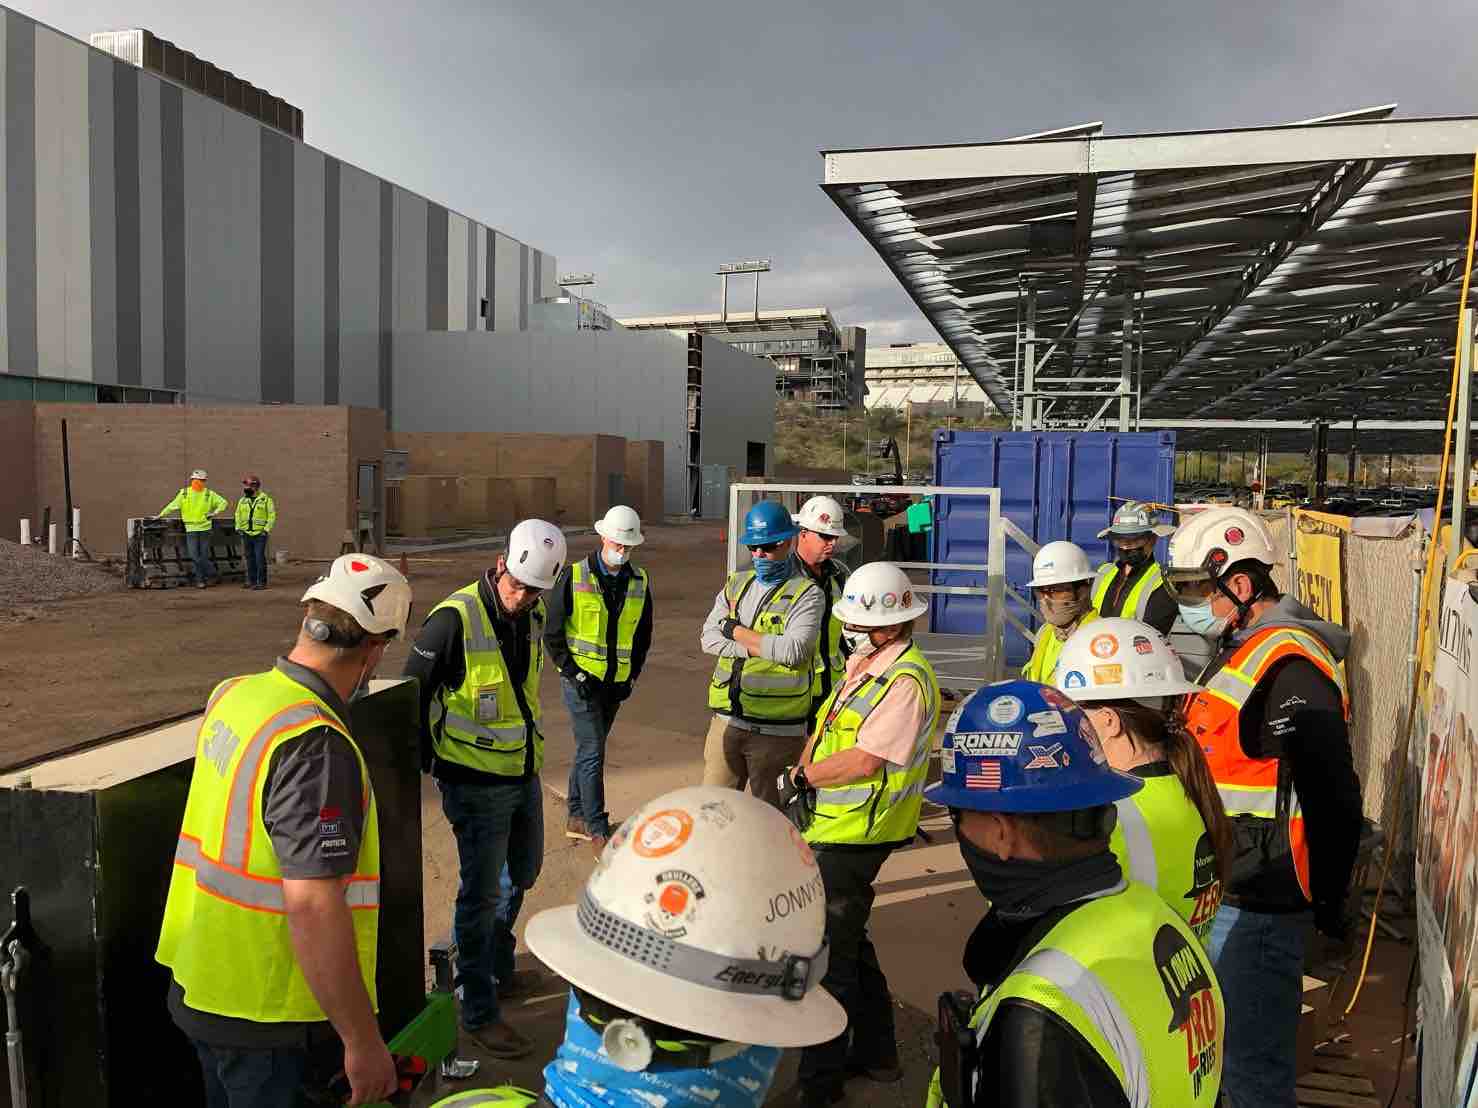 New University of Arizona Multi-Use Facility Project